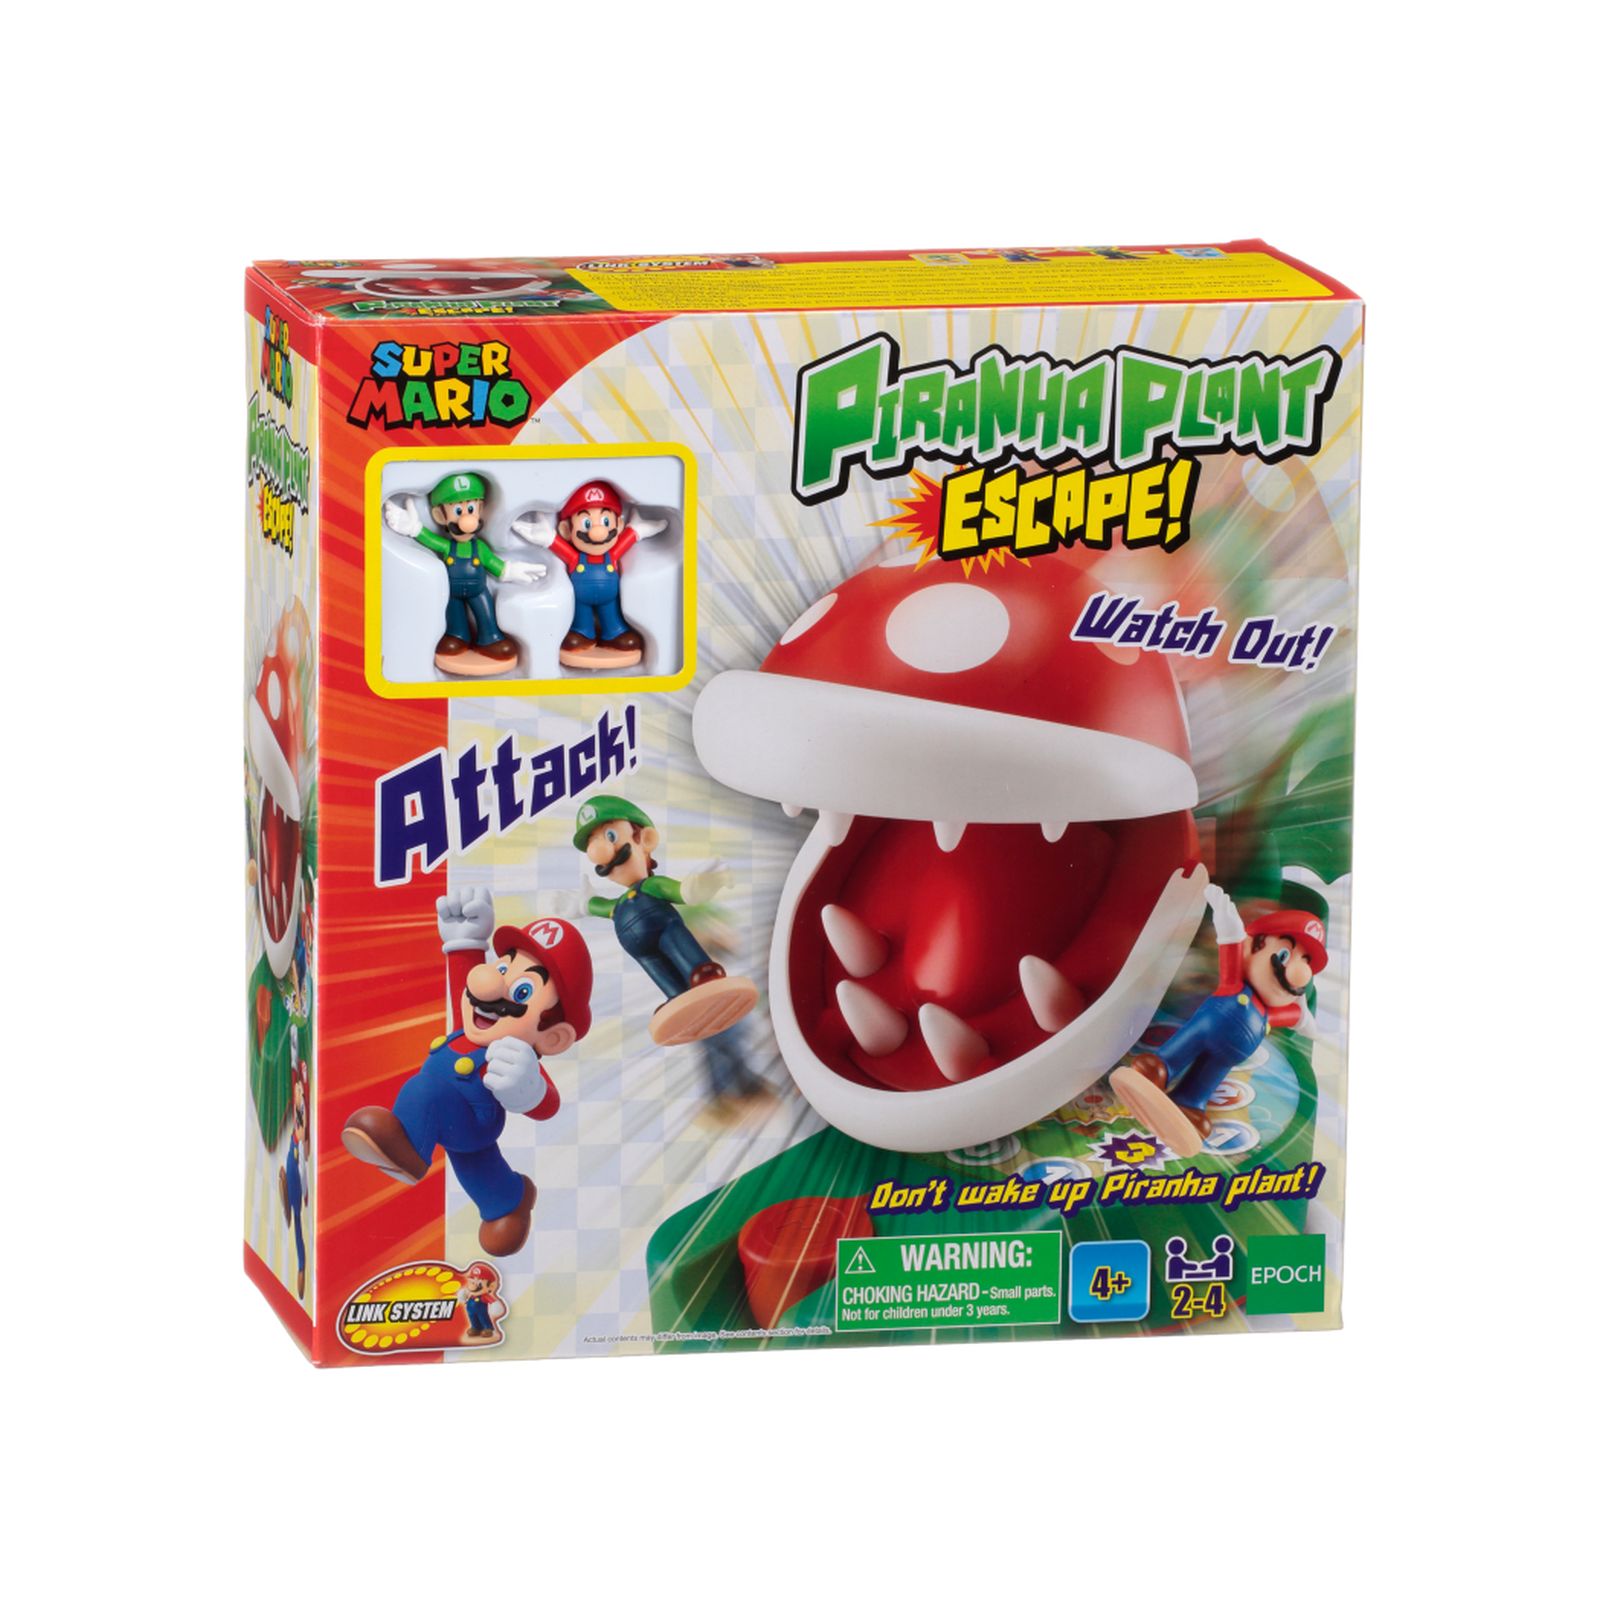 Super mario piranha plant escape! - Super Mario